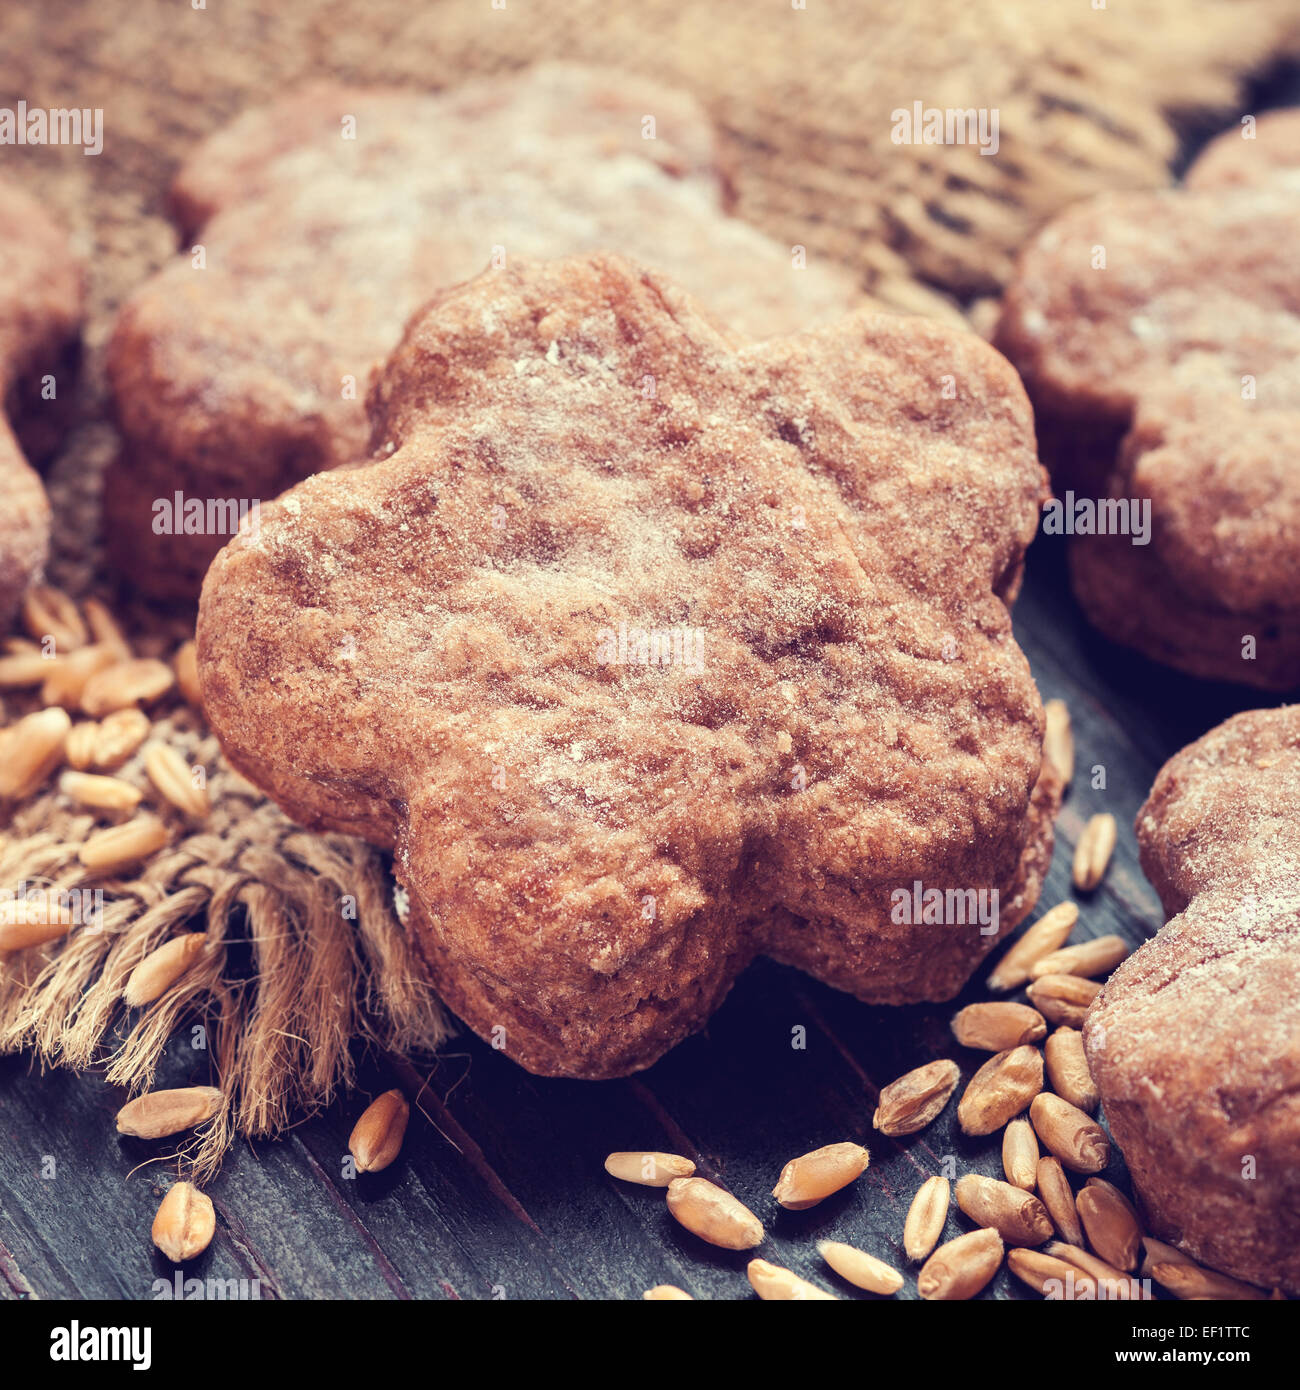 homemade cookies, vintage stylized photo Stock Photo